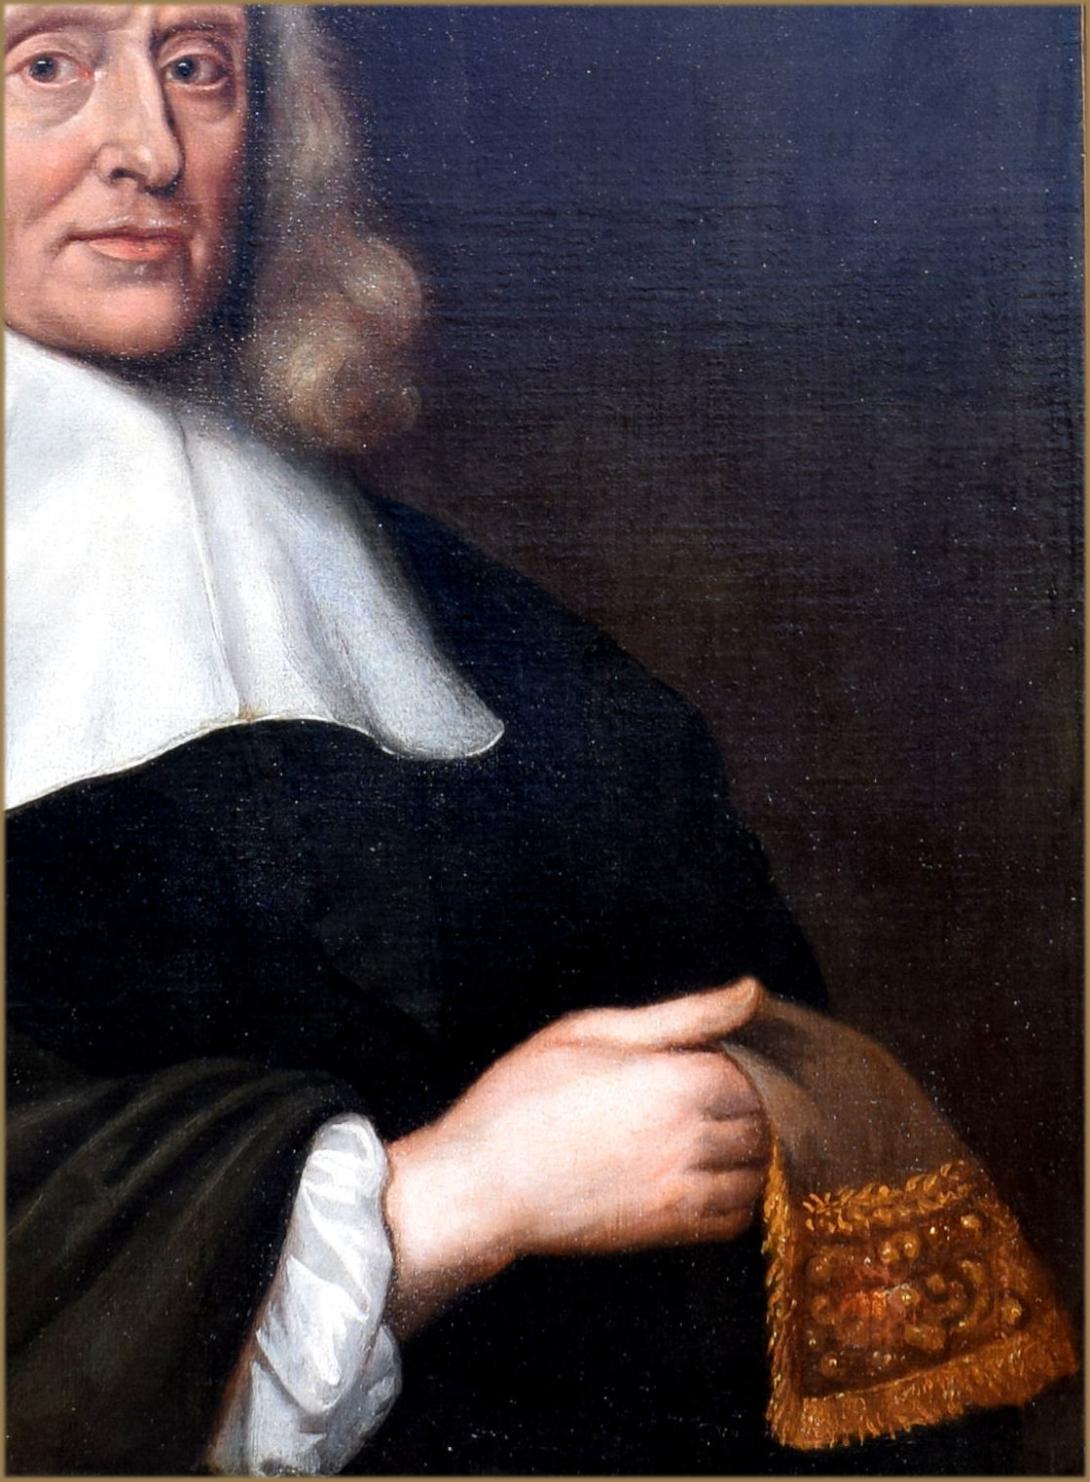 John Milton 1608 1674 Foi Poeta Intelectual Inglês Ele Escreveu imagem  vetorial de biblebox© 383124992